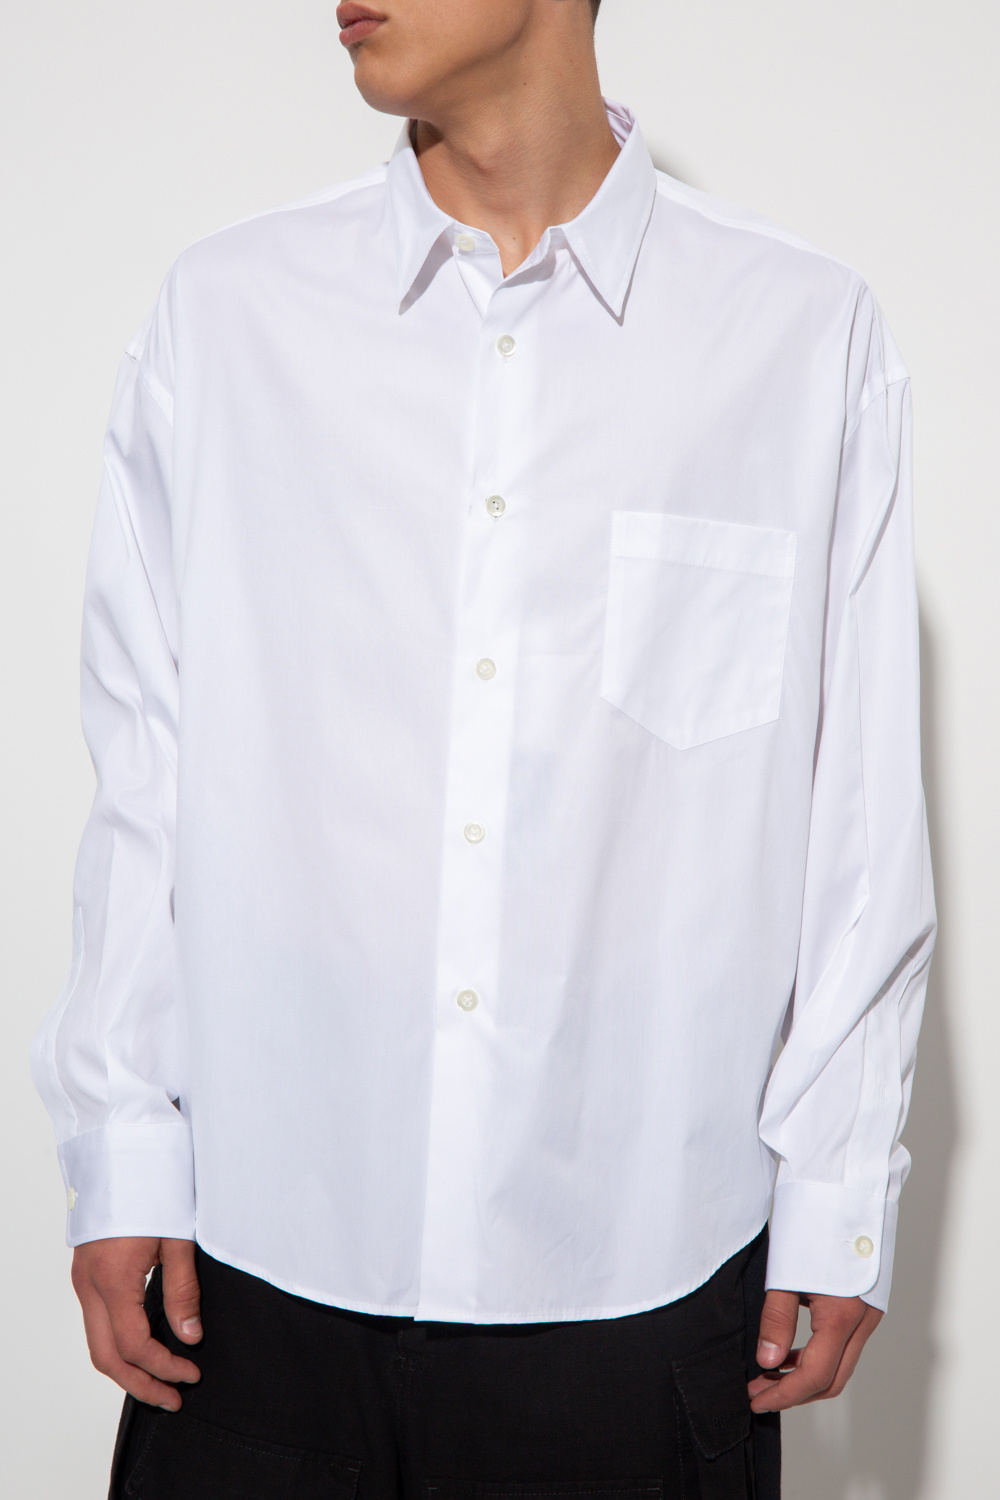 Ami Alexandre Mattiussi paisley shirt with long sleeves